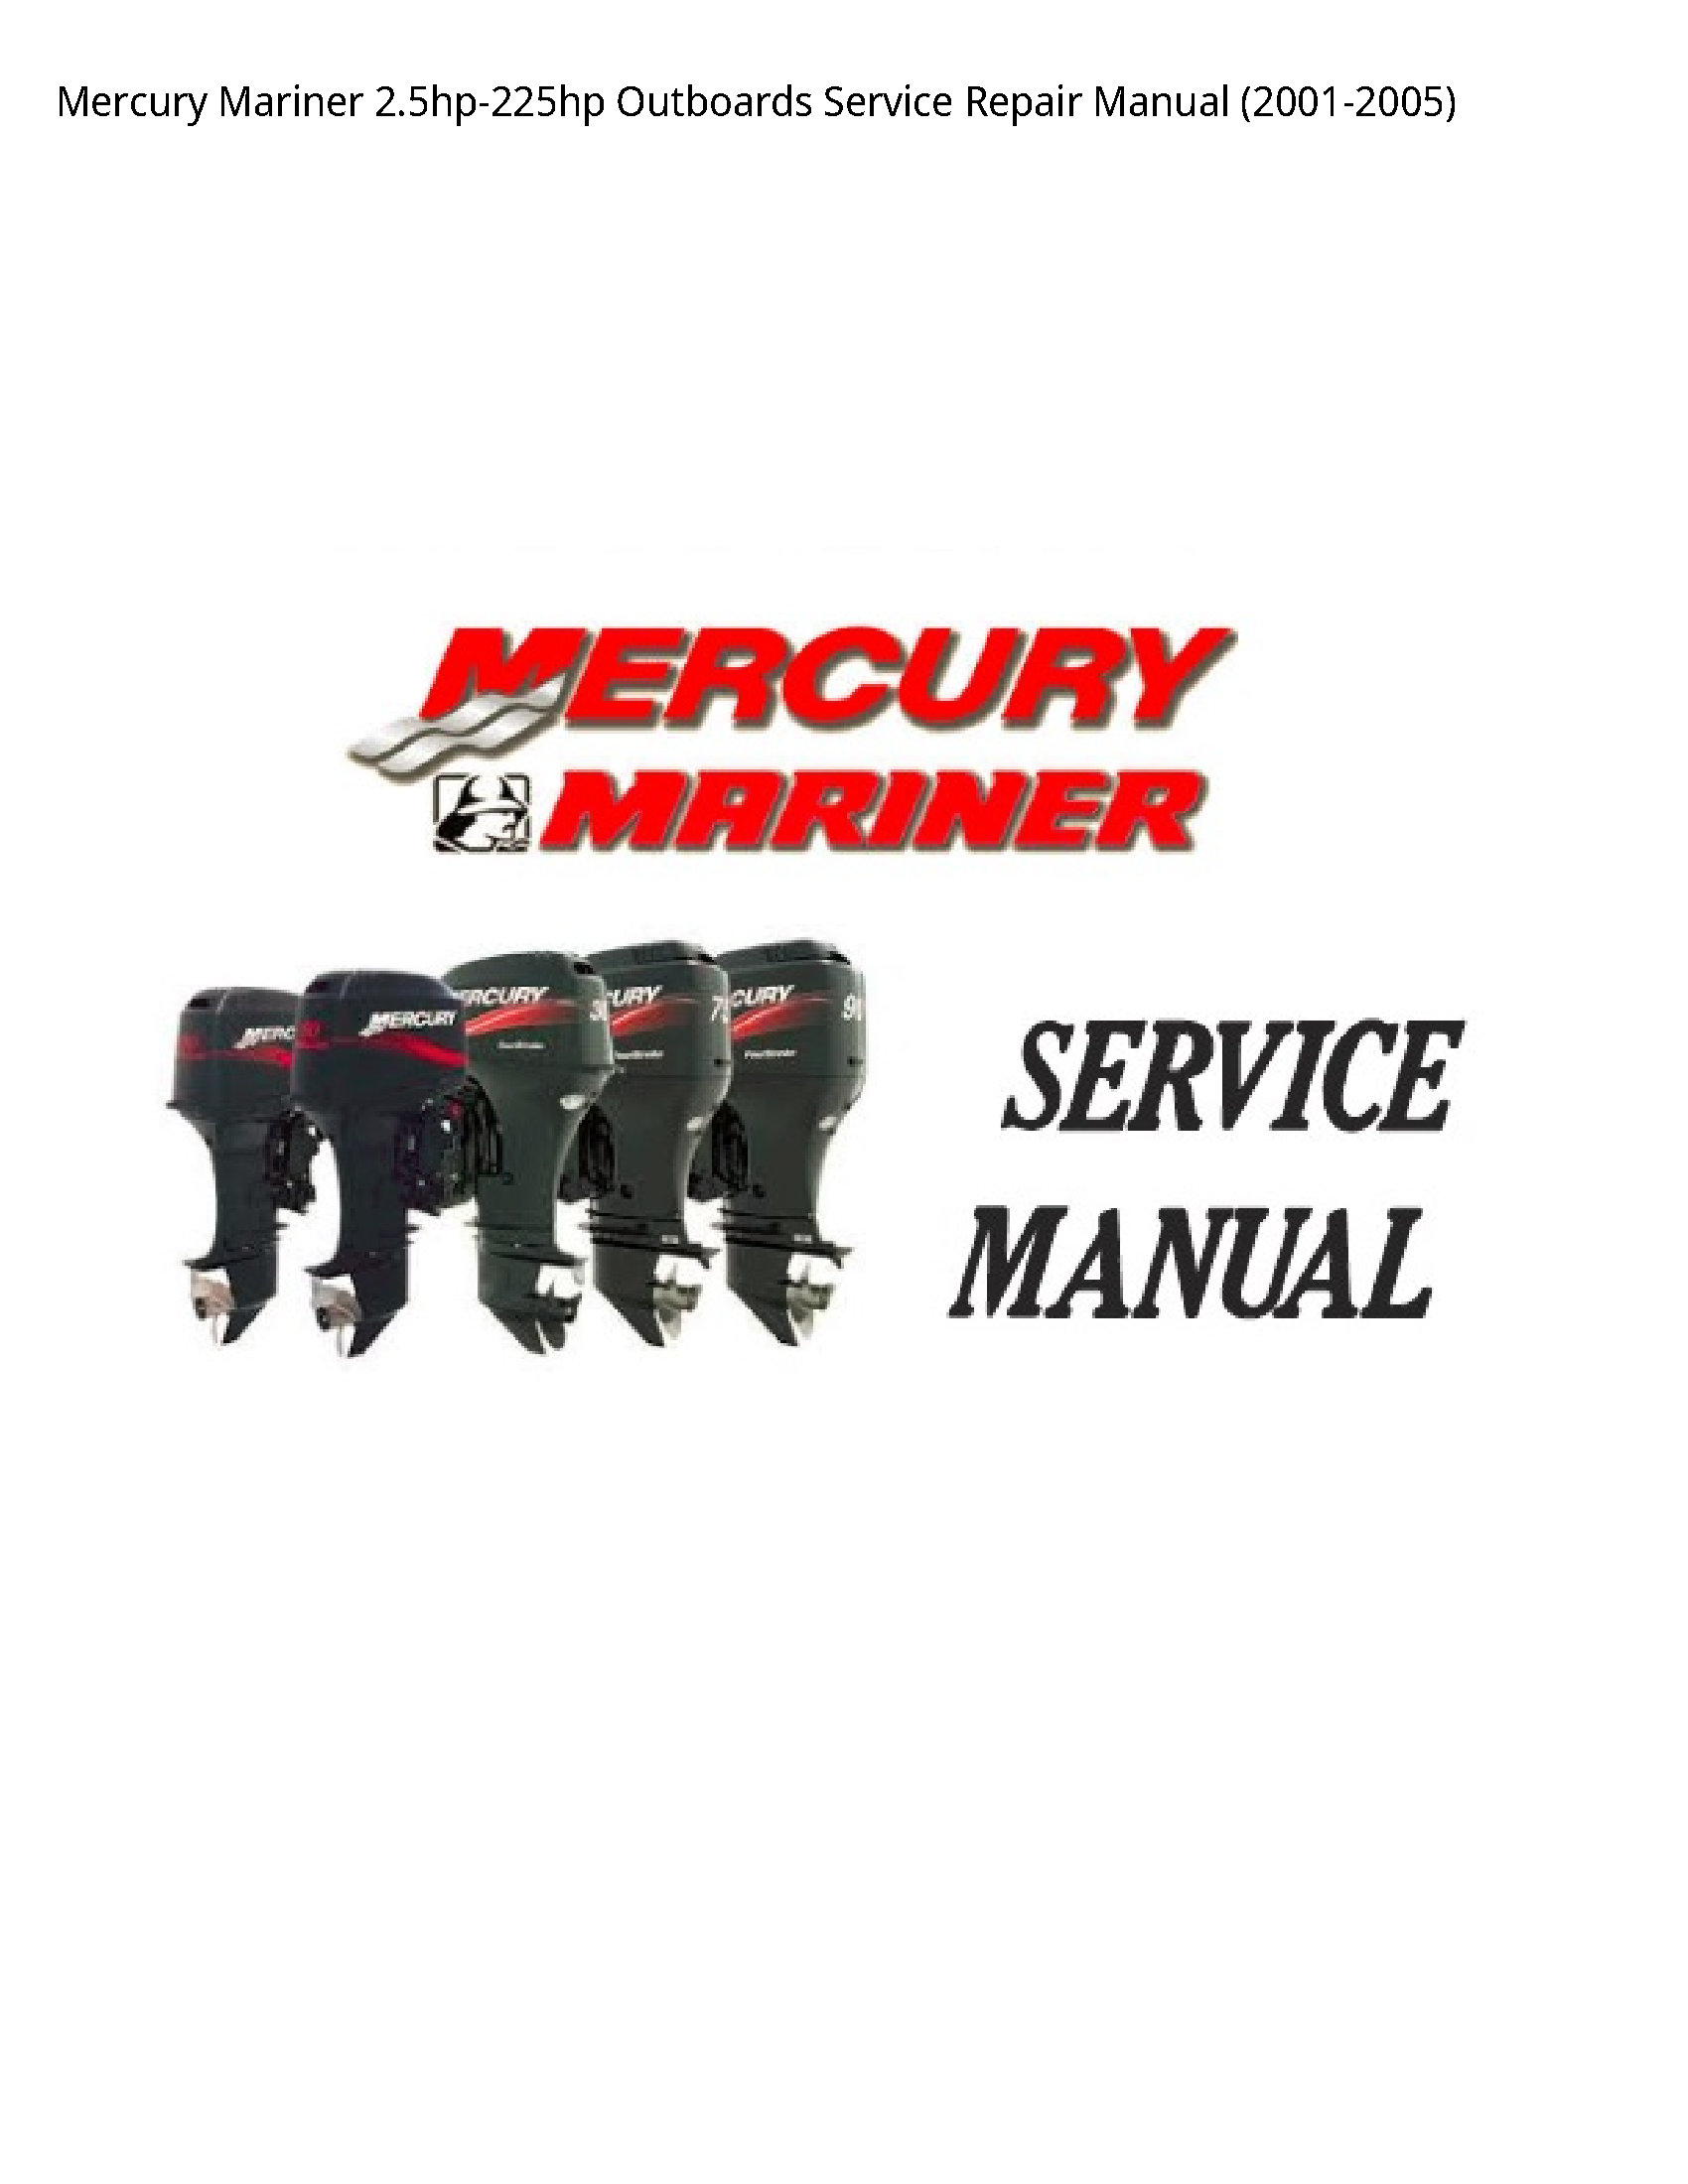 Mercury Mariner 2.5hp-225hp Outboards manual